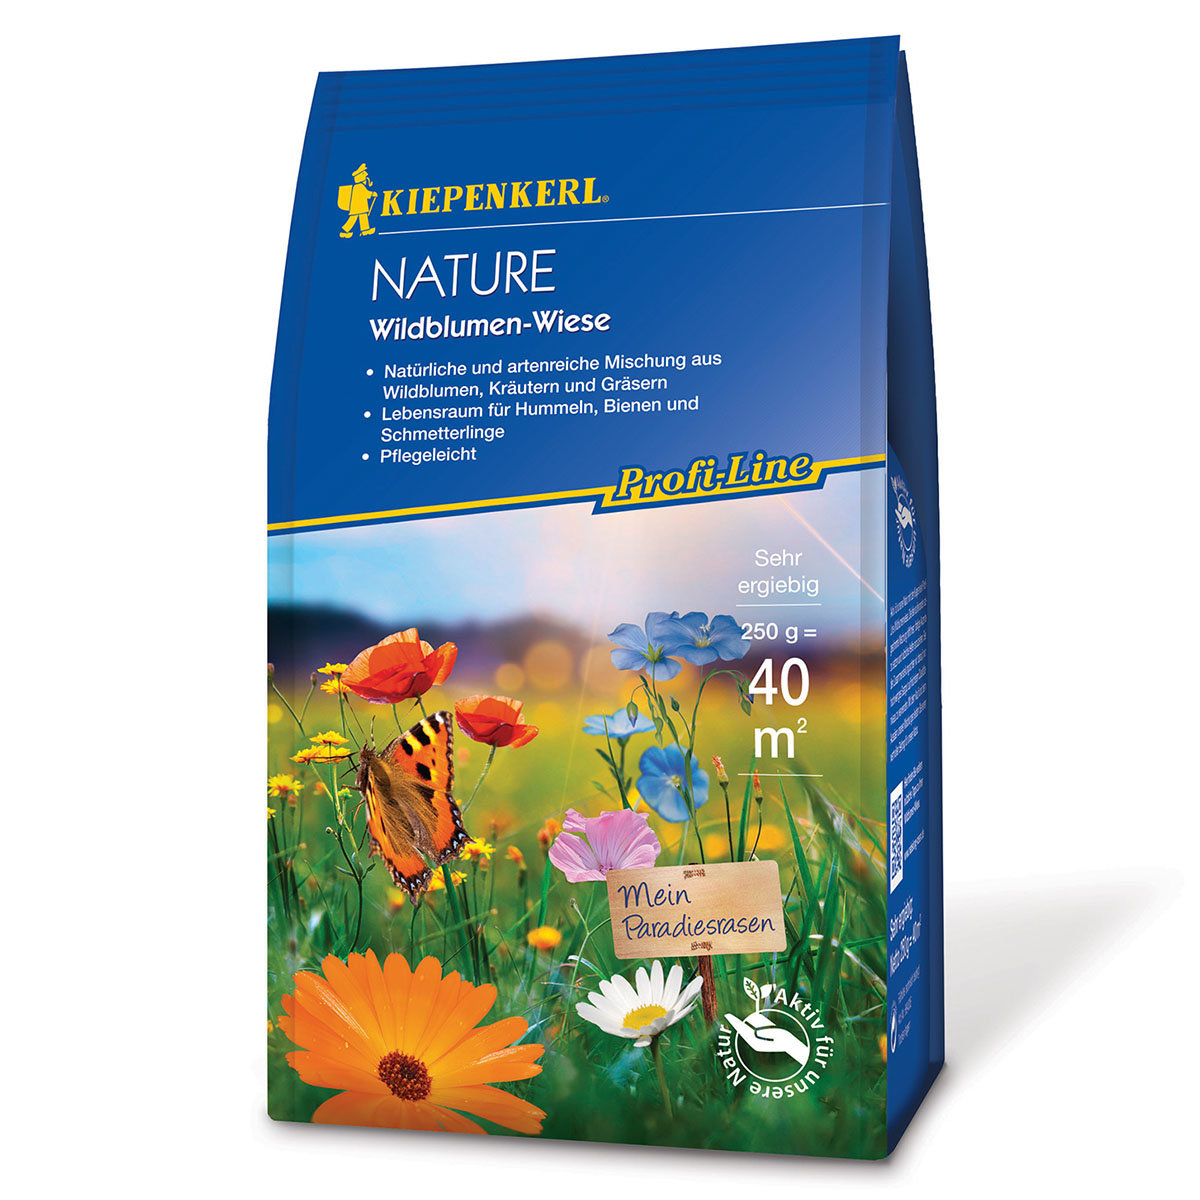 Profi-Line Nature Wildblumen-Wiesensamen, 250 g
